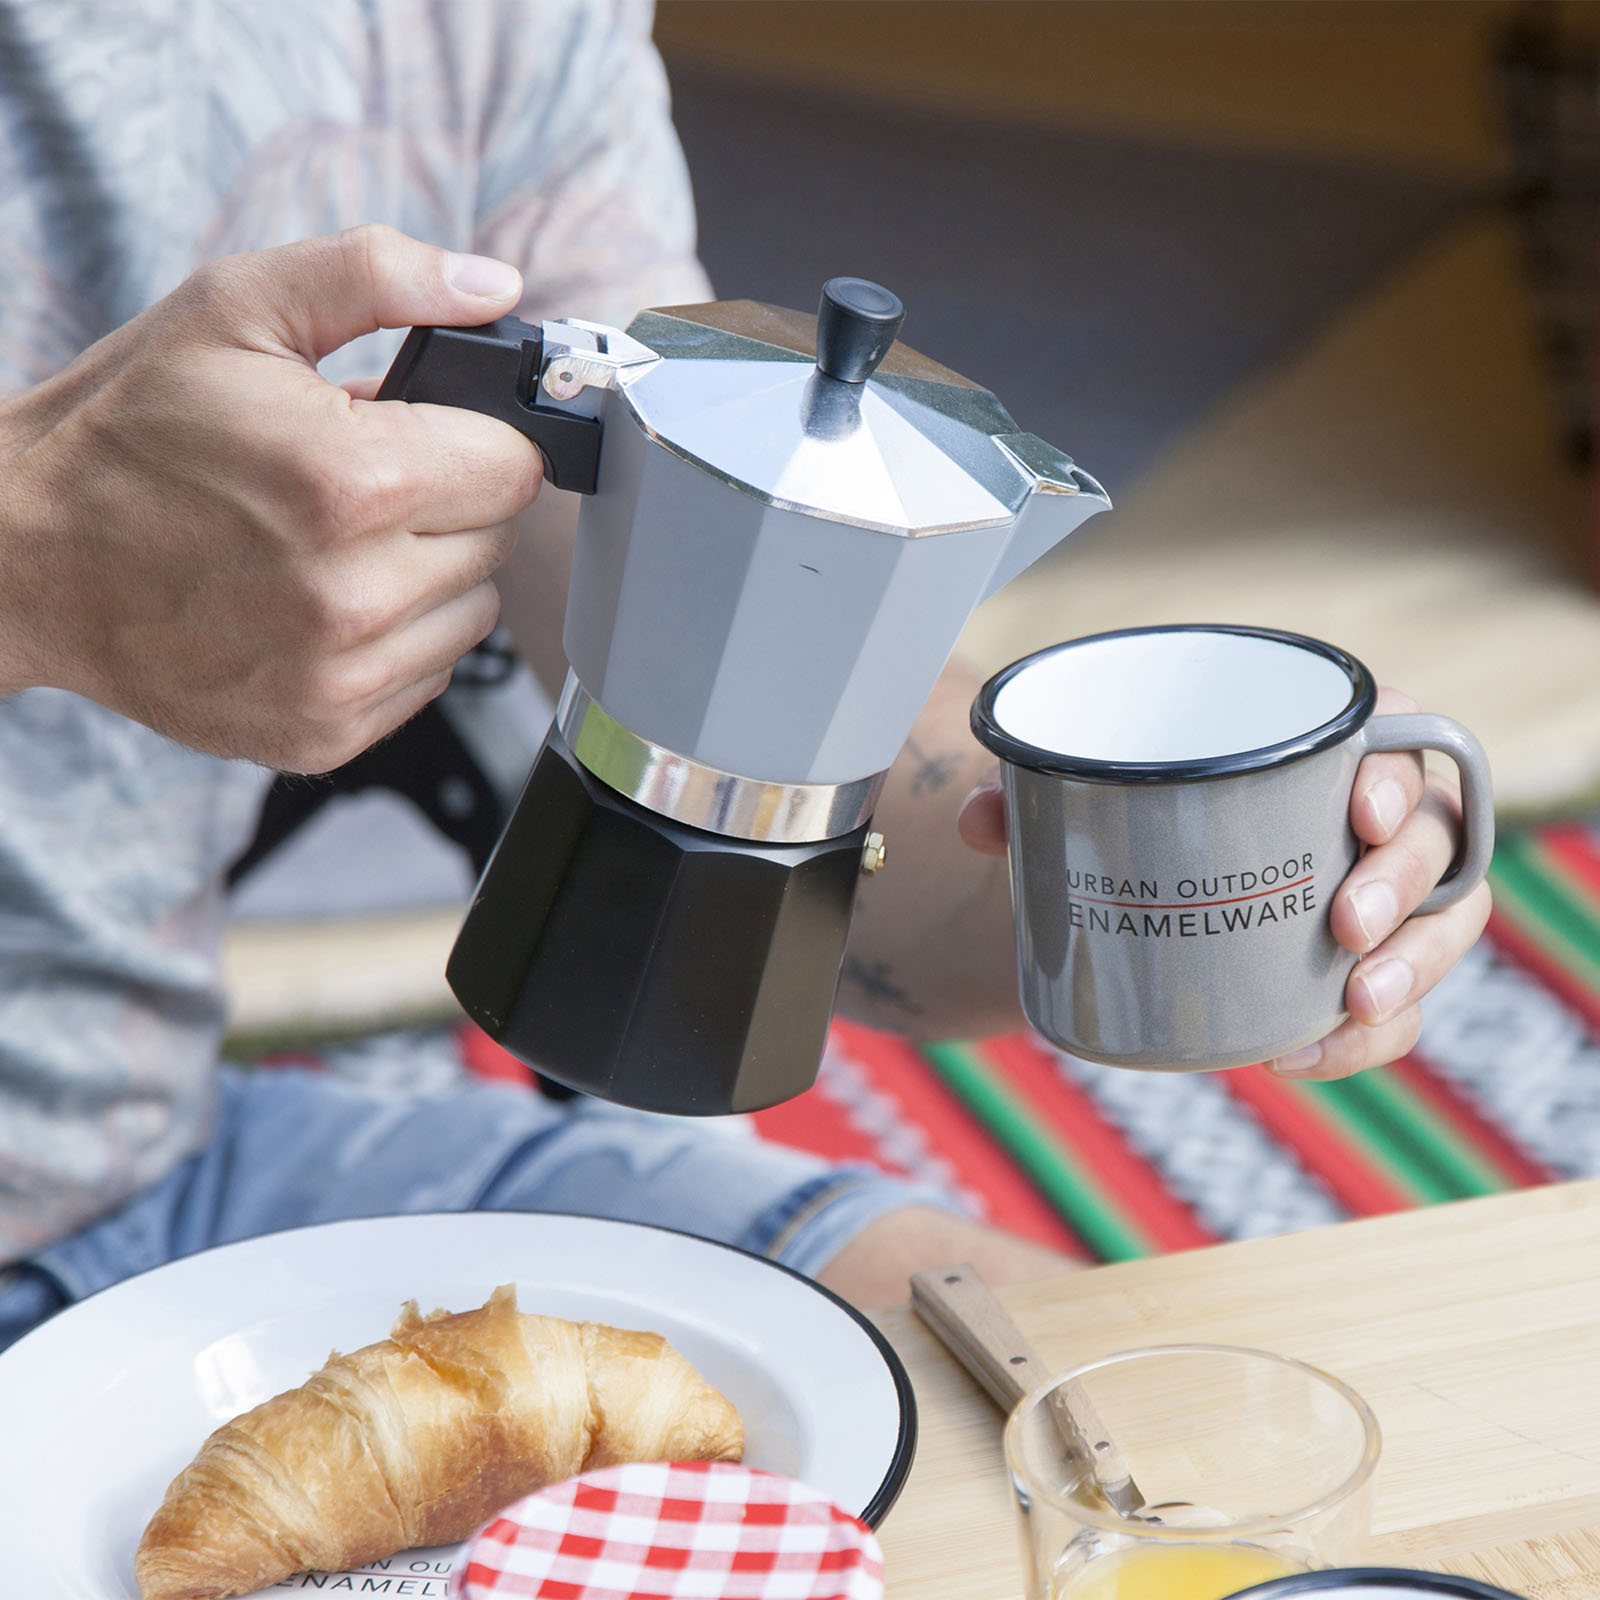 BO-CAMP Espressokocher Percolator - Kaffee Kocher Espresso Kanne Alu 2-6 Tassen